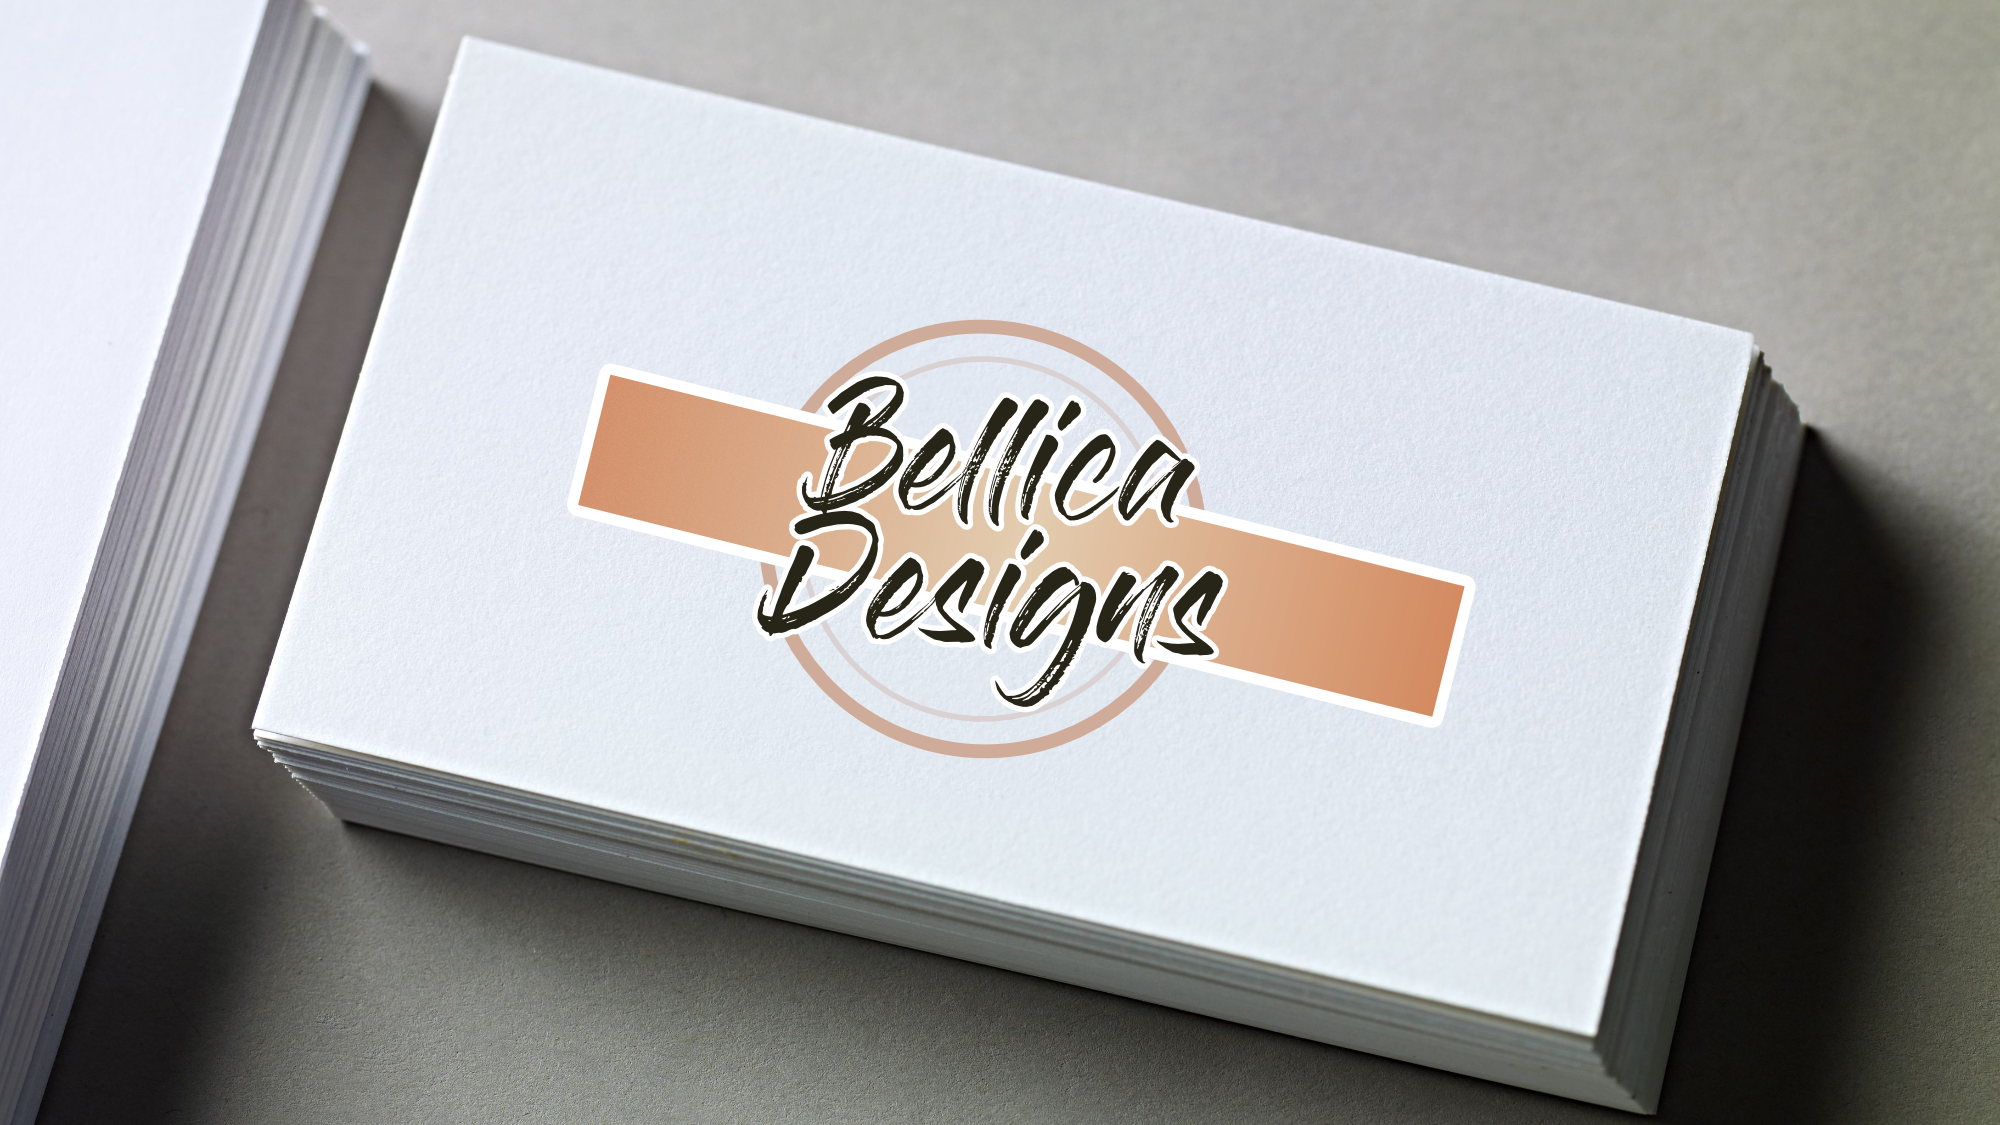 bellica-designs-logo-mockup